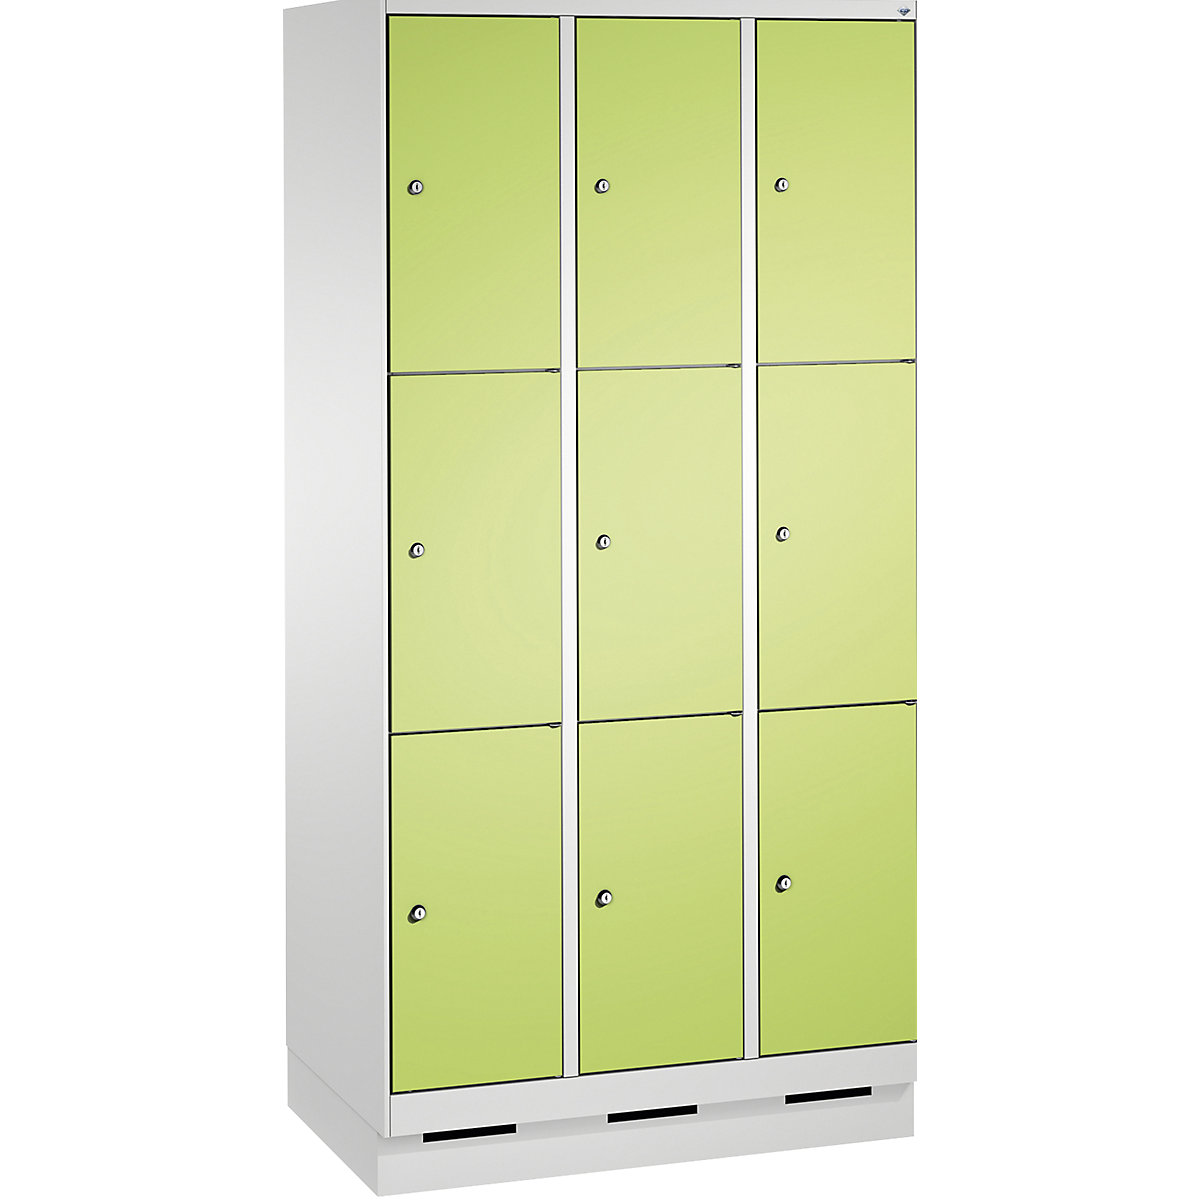 EVOLO locker unit, with plinth – C+P, 3 compartments, 3 shelf compartments each, compartment width 300 mm, light grey / viridian green-13